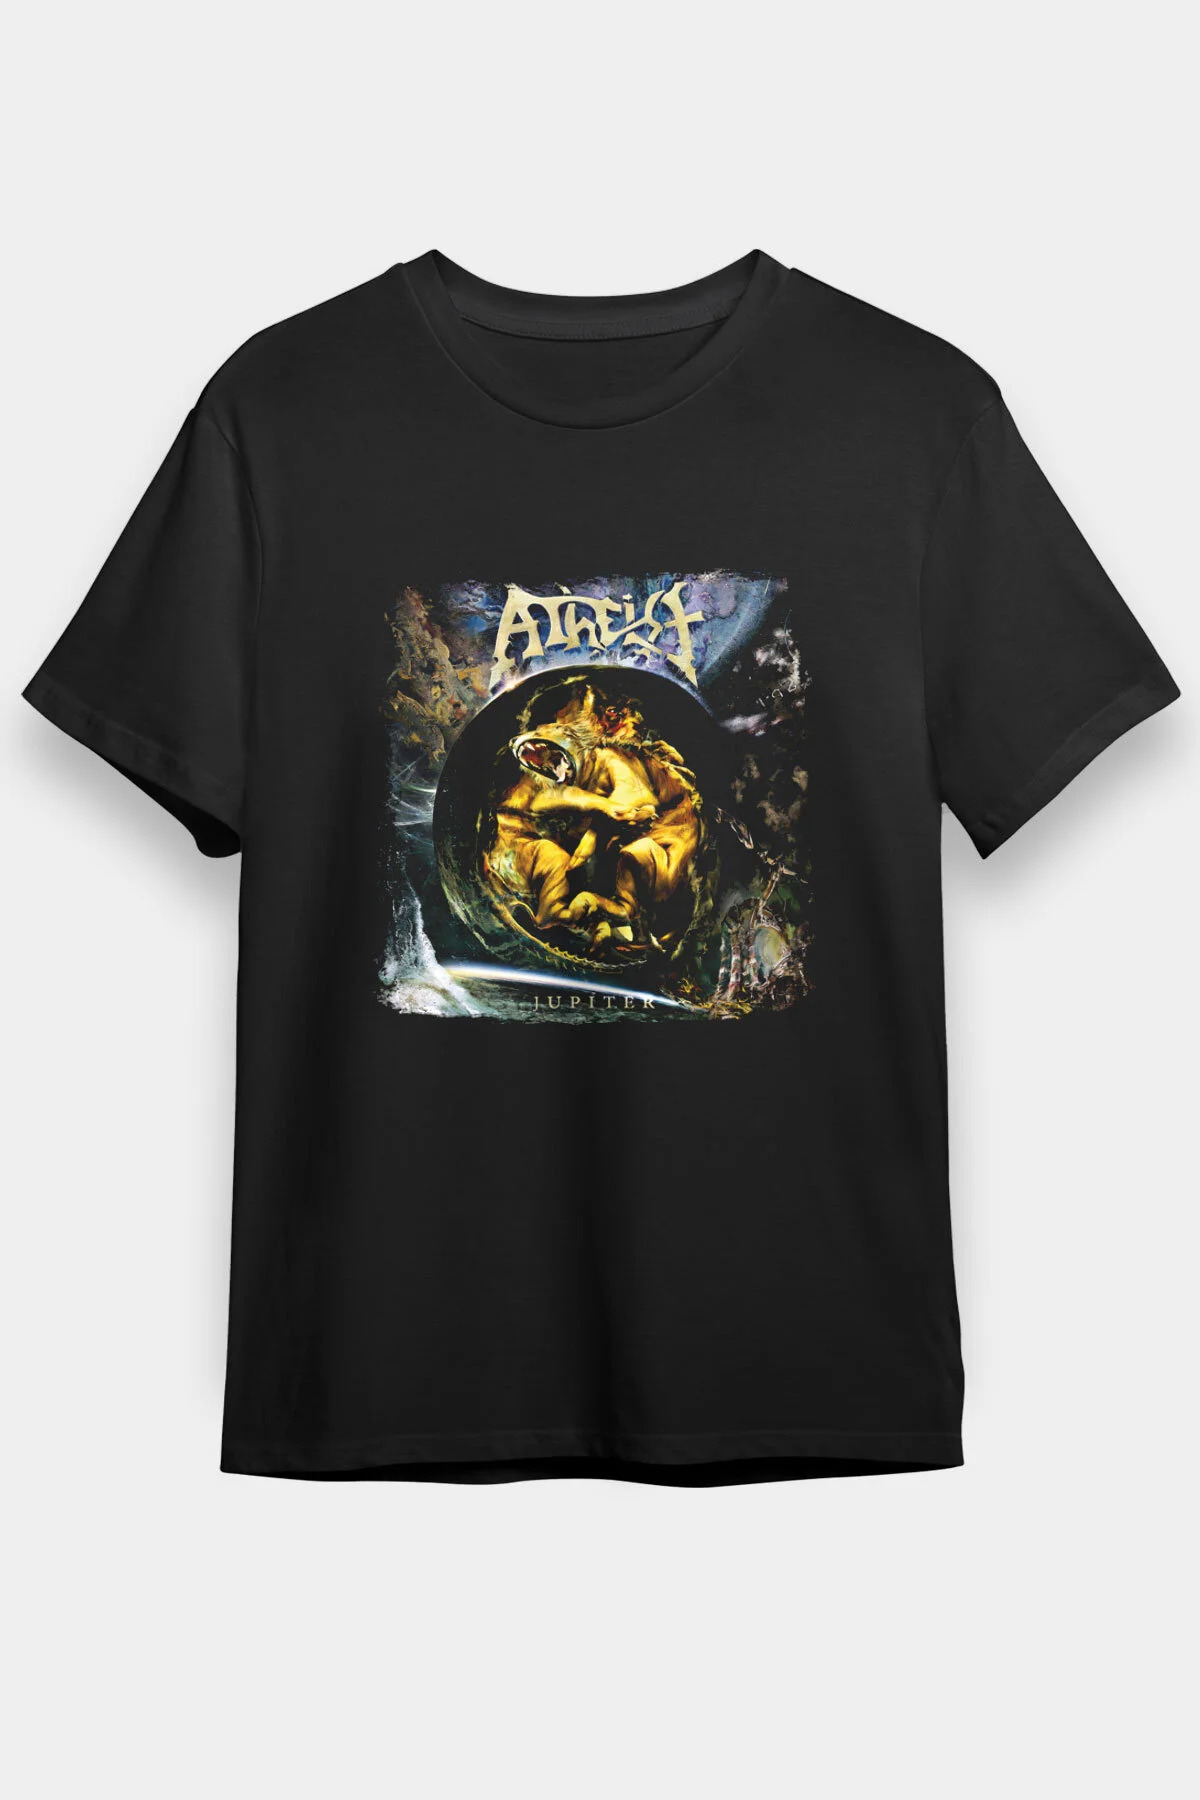 Atheist ,Music Band ,Unisex Tshirt 03/